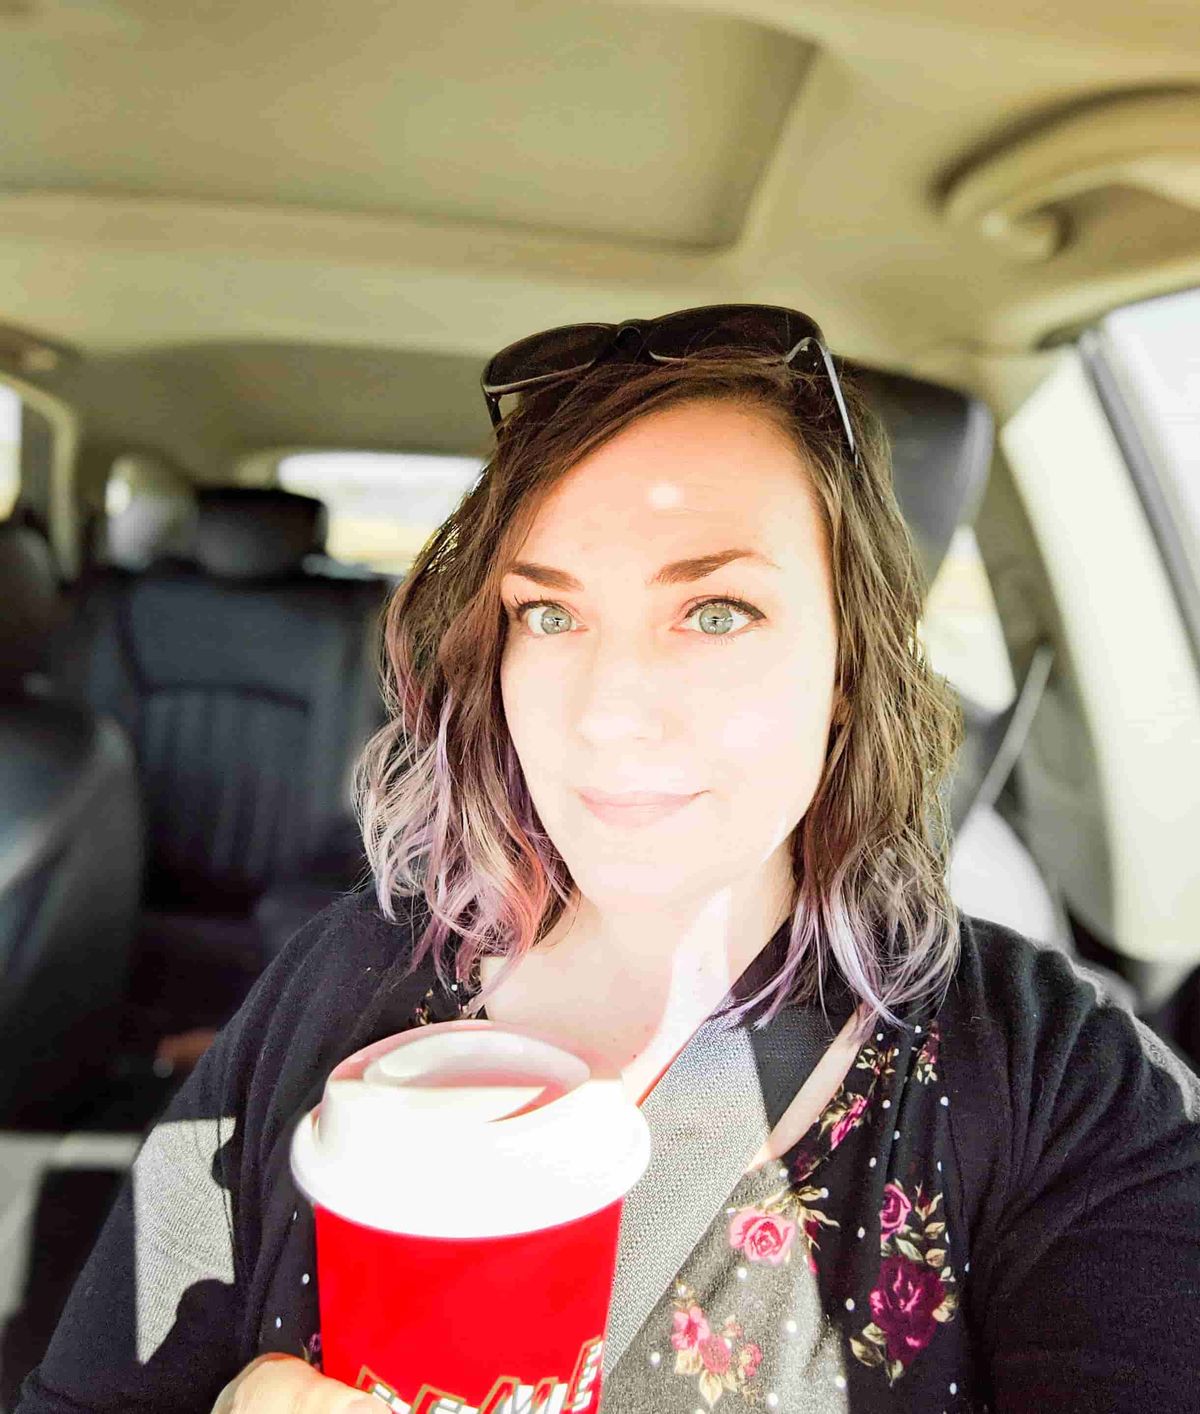 Courtney White selfie koos kohvitassiga